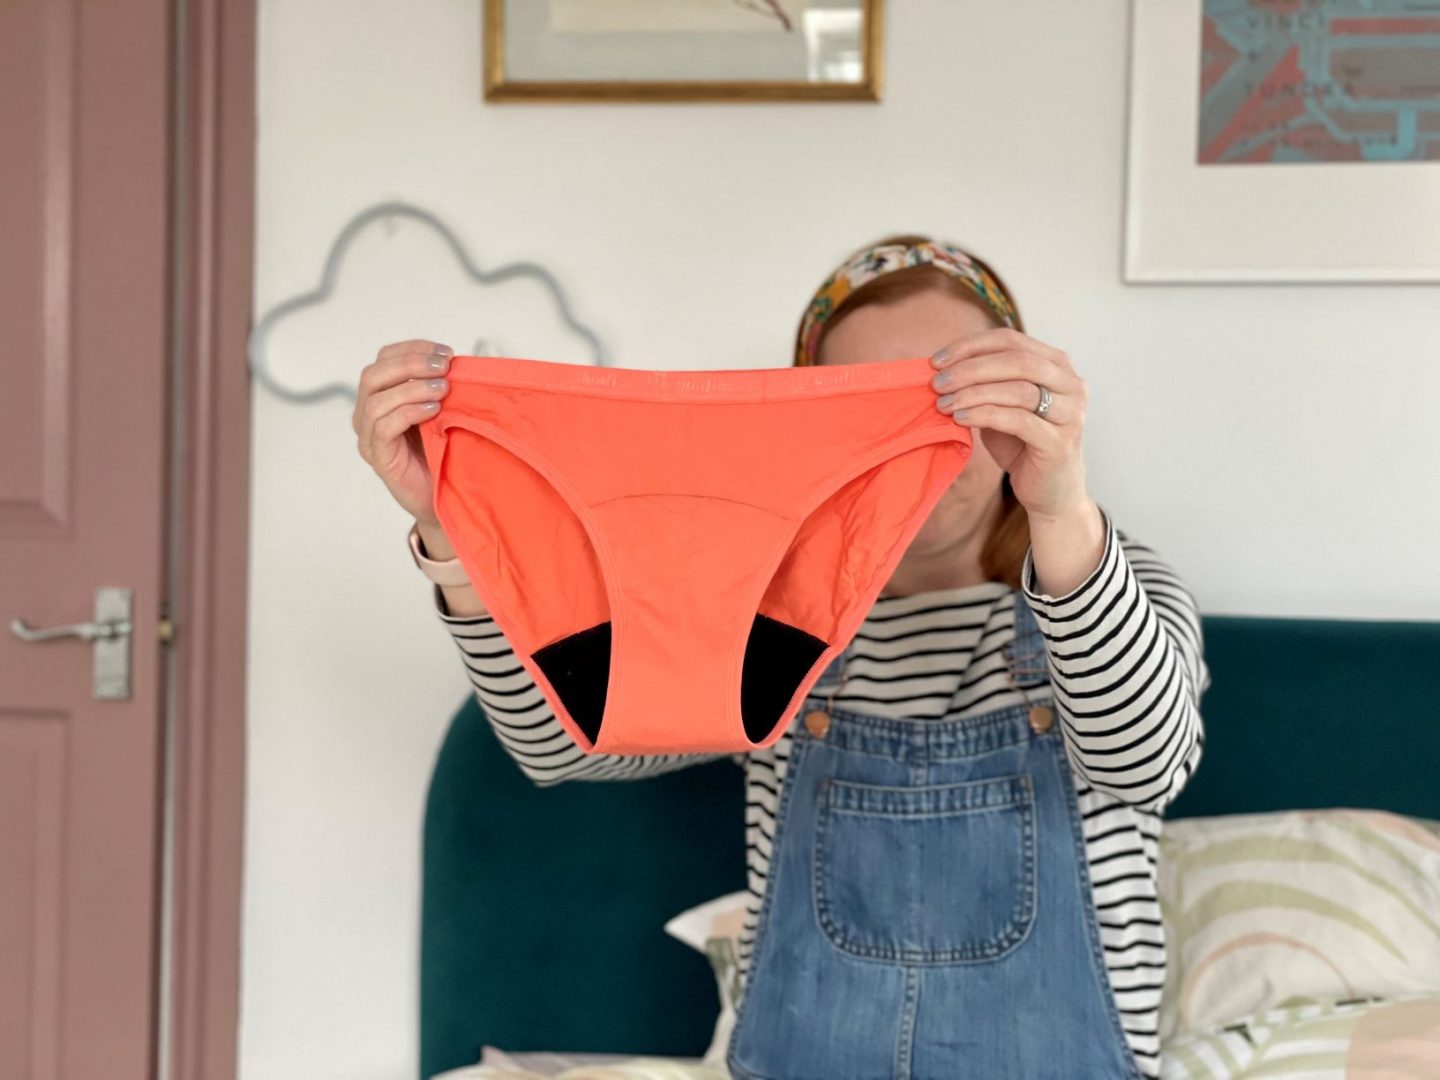 Modibodi Period Pants Review – We Tried Reusable Period Underwear